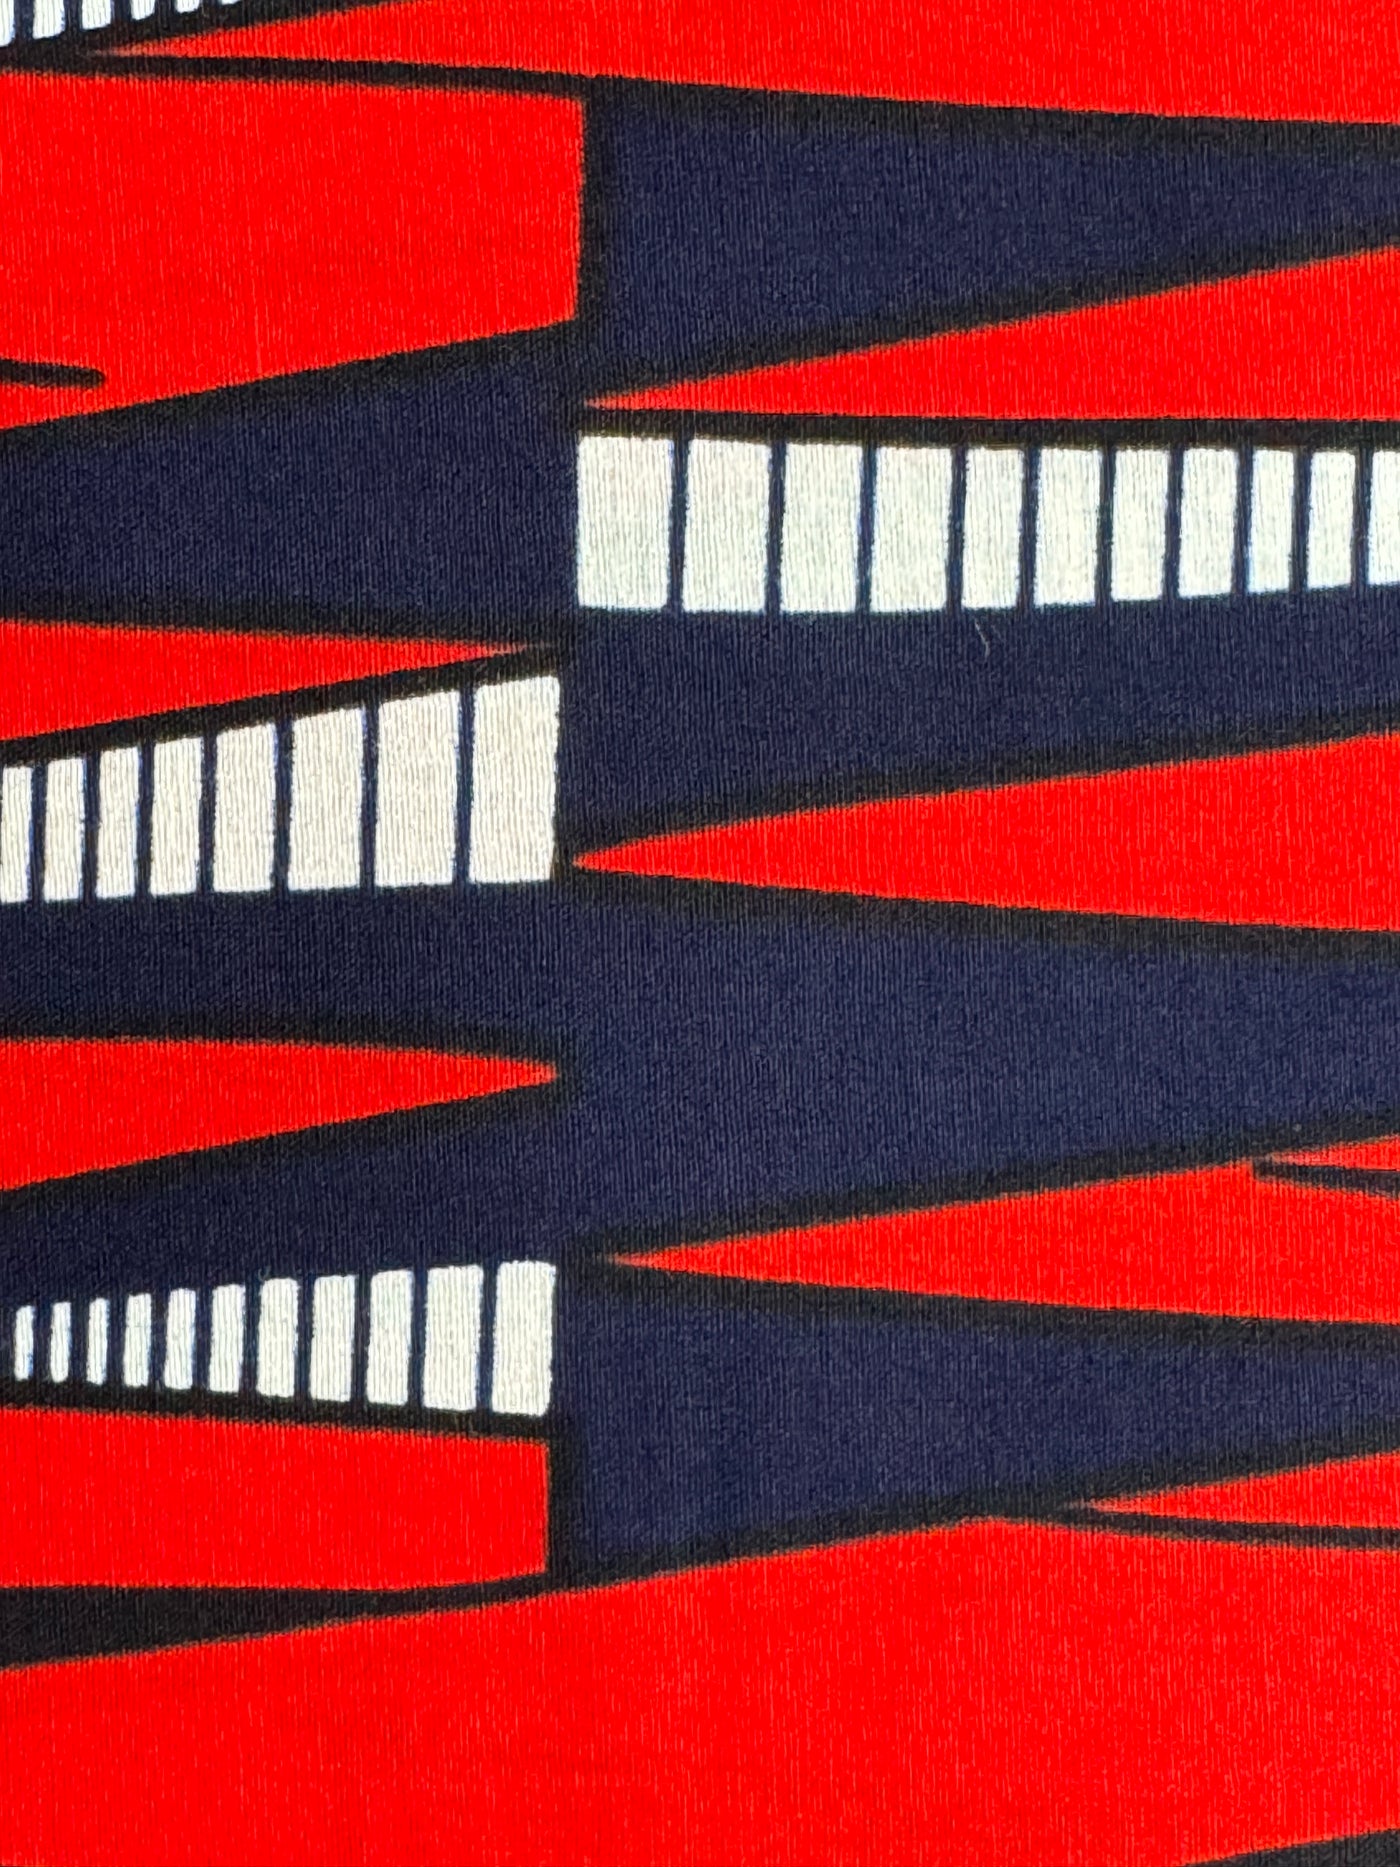 Ankara Fabric - 149150